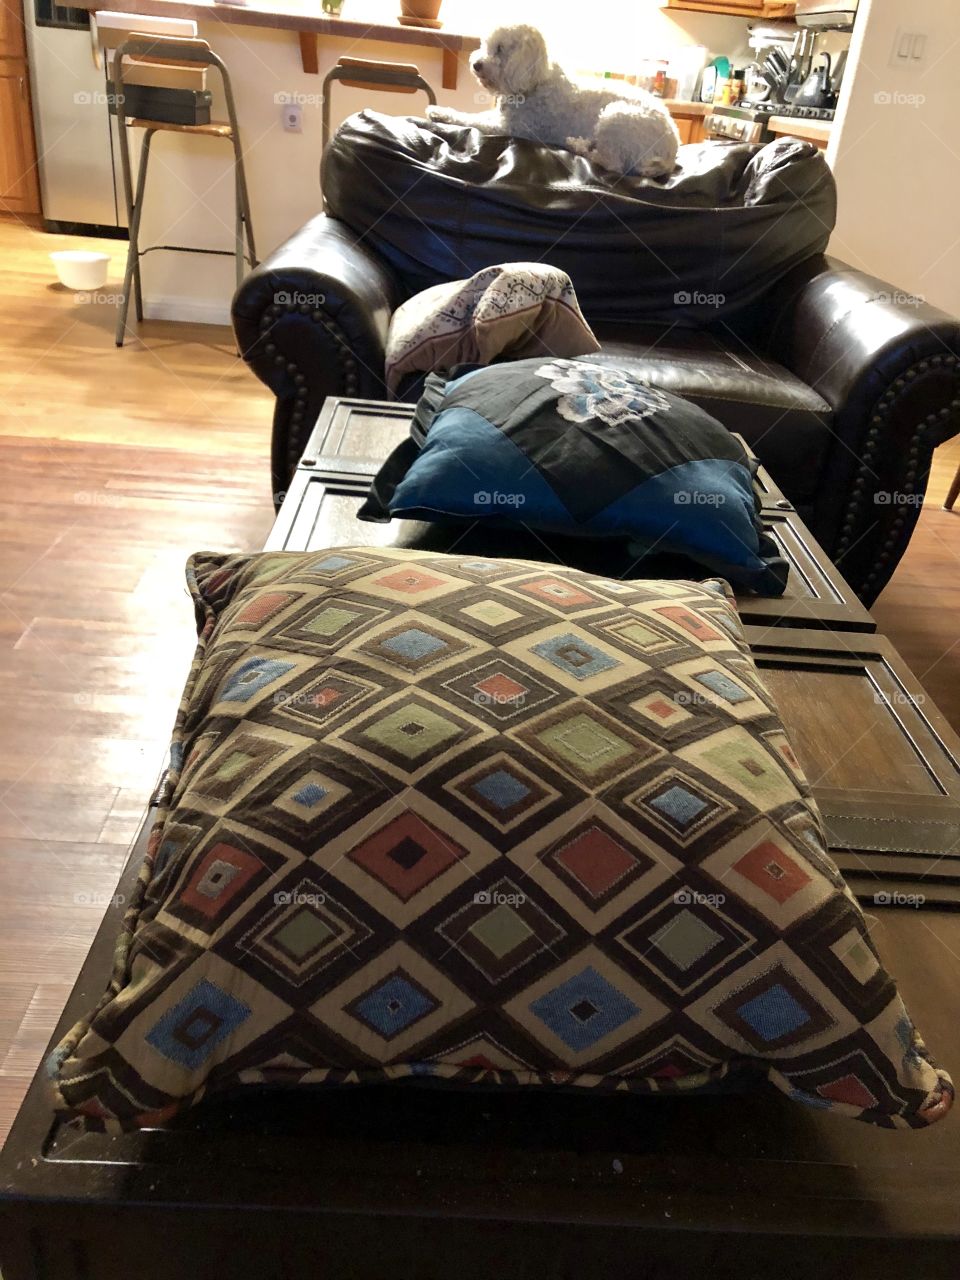 3 pillows, a chair and Rascal.